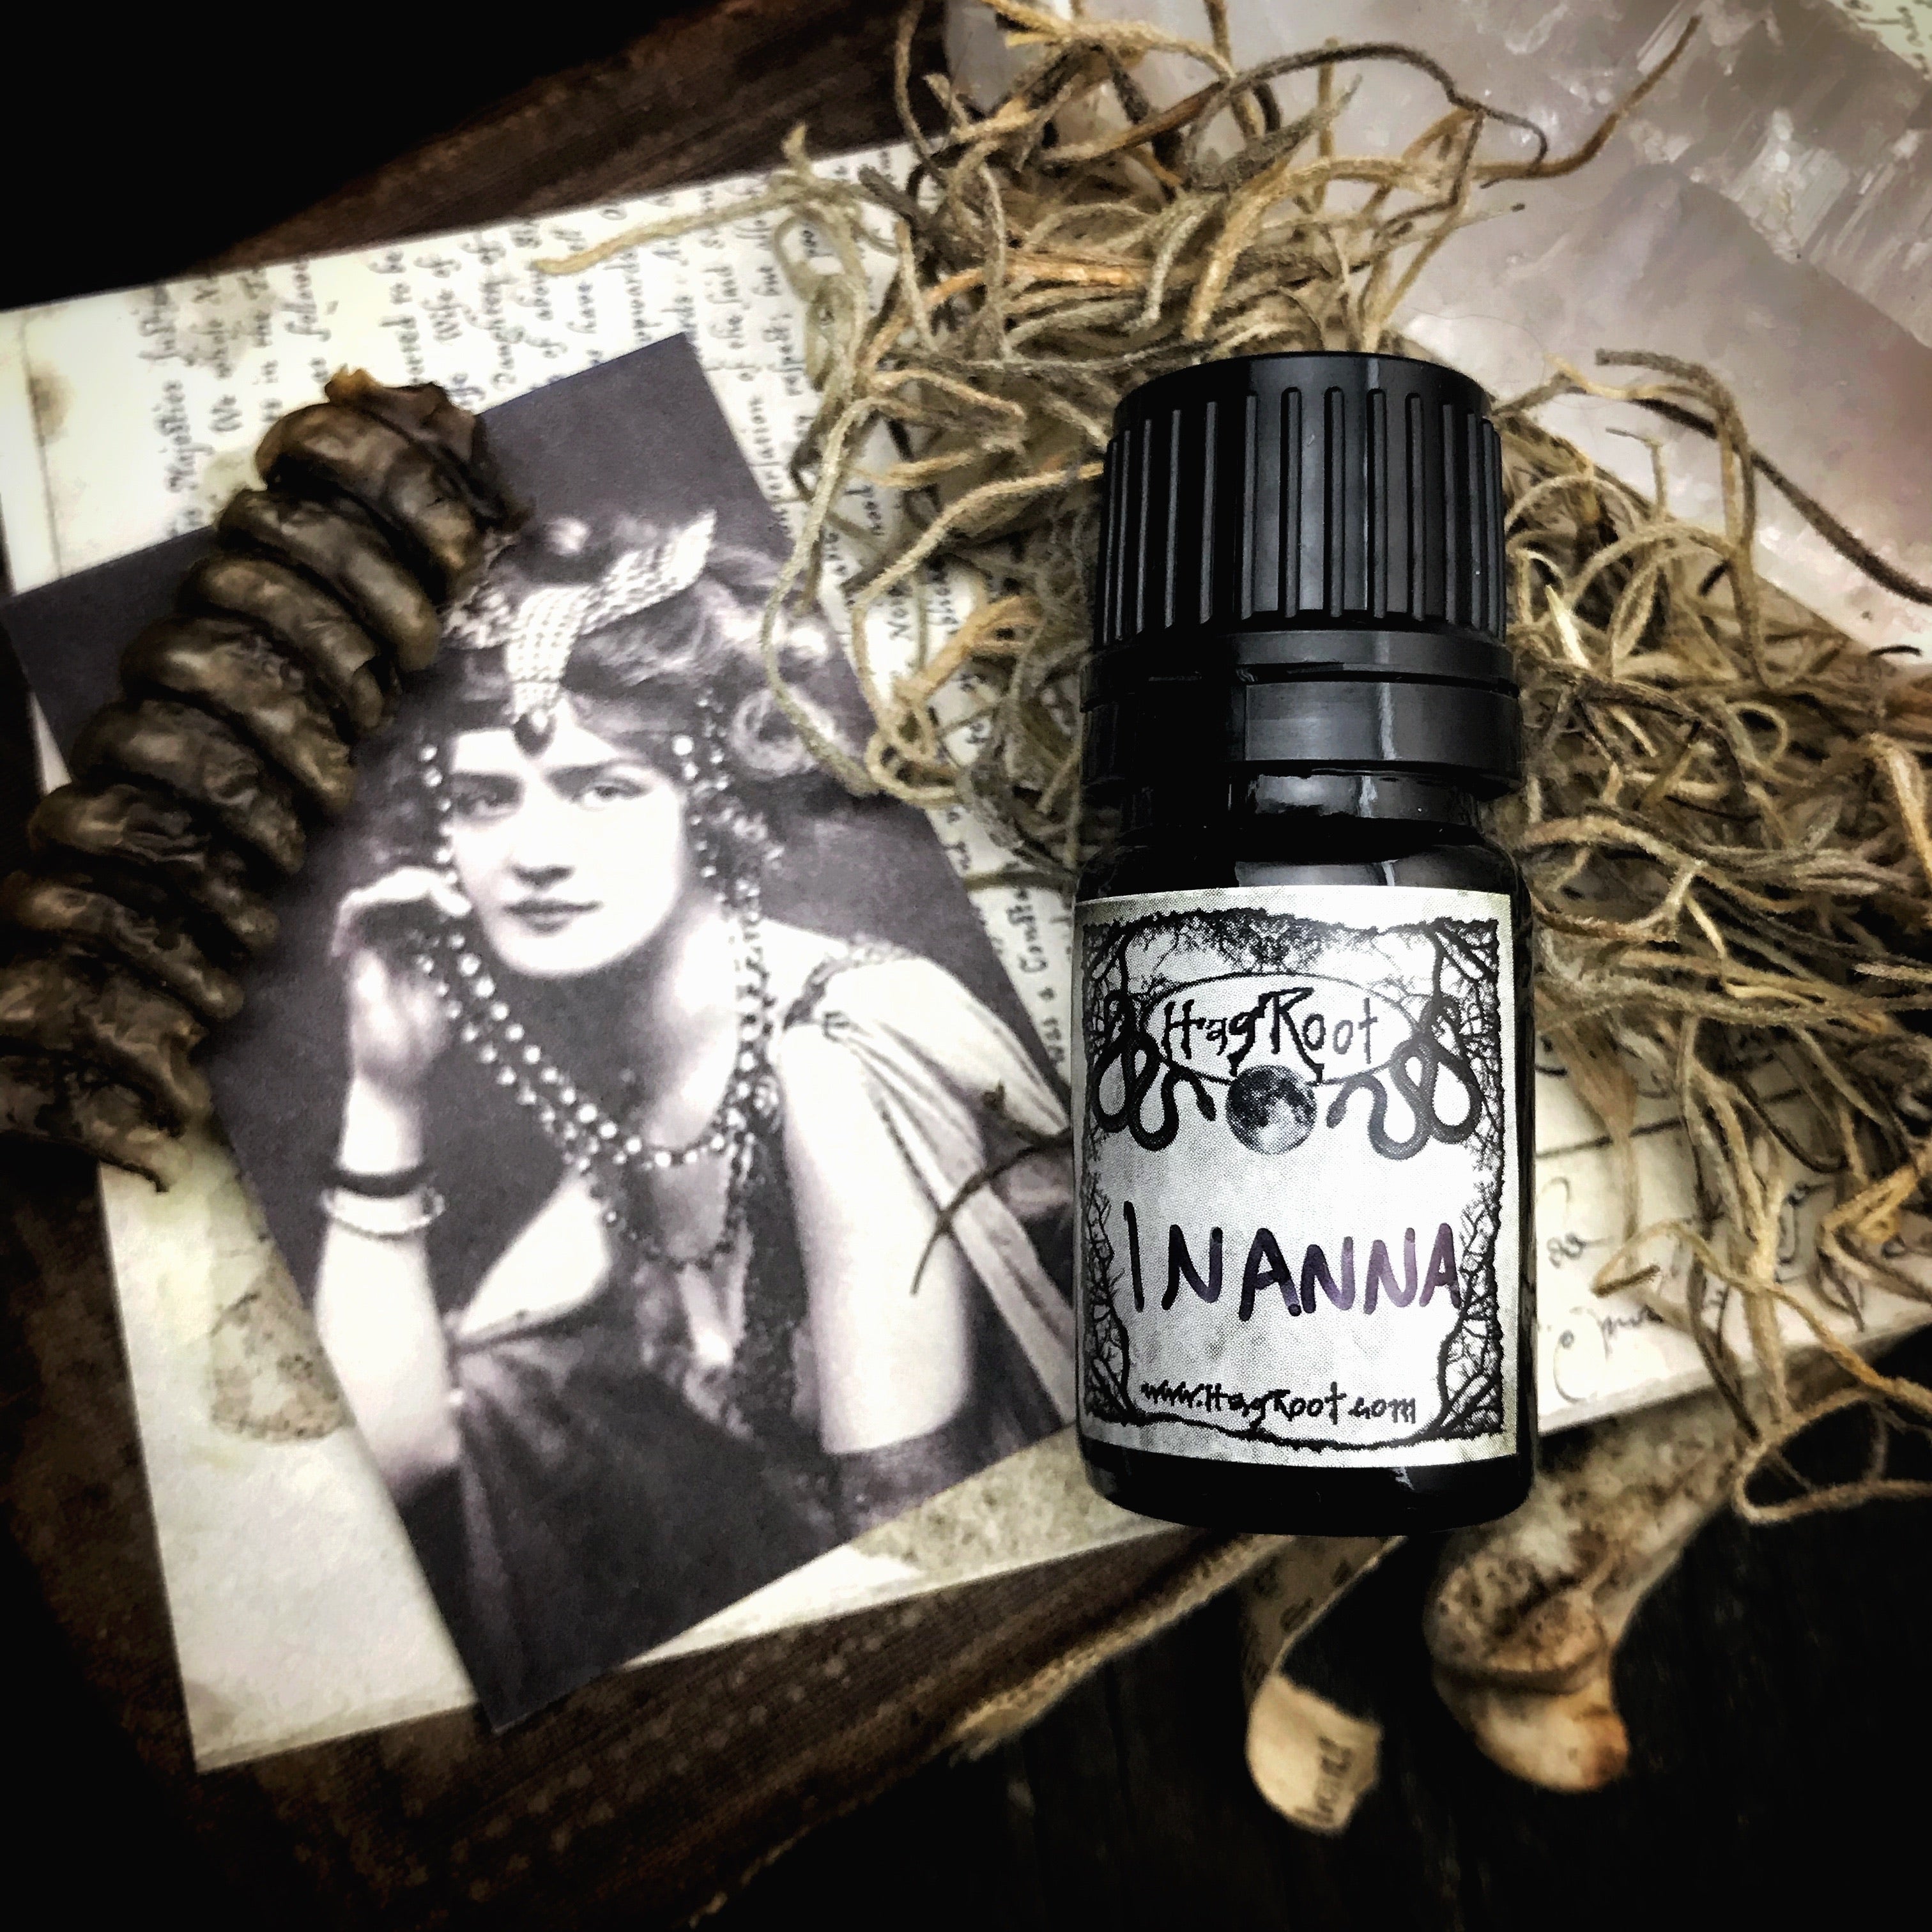 Warm Vanilla Sugar Fragrance Oil - Natural Sister's / Nature's Lab Store